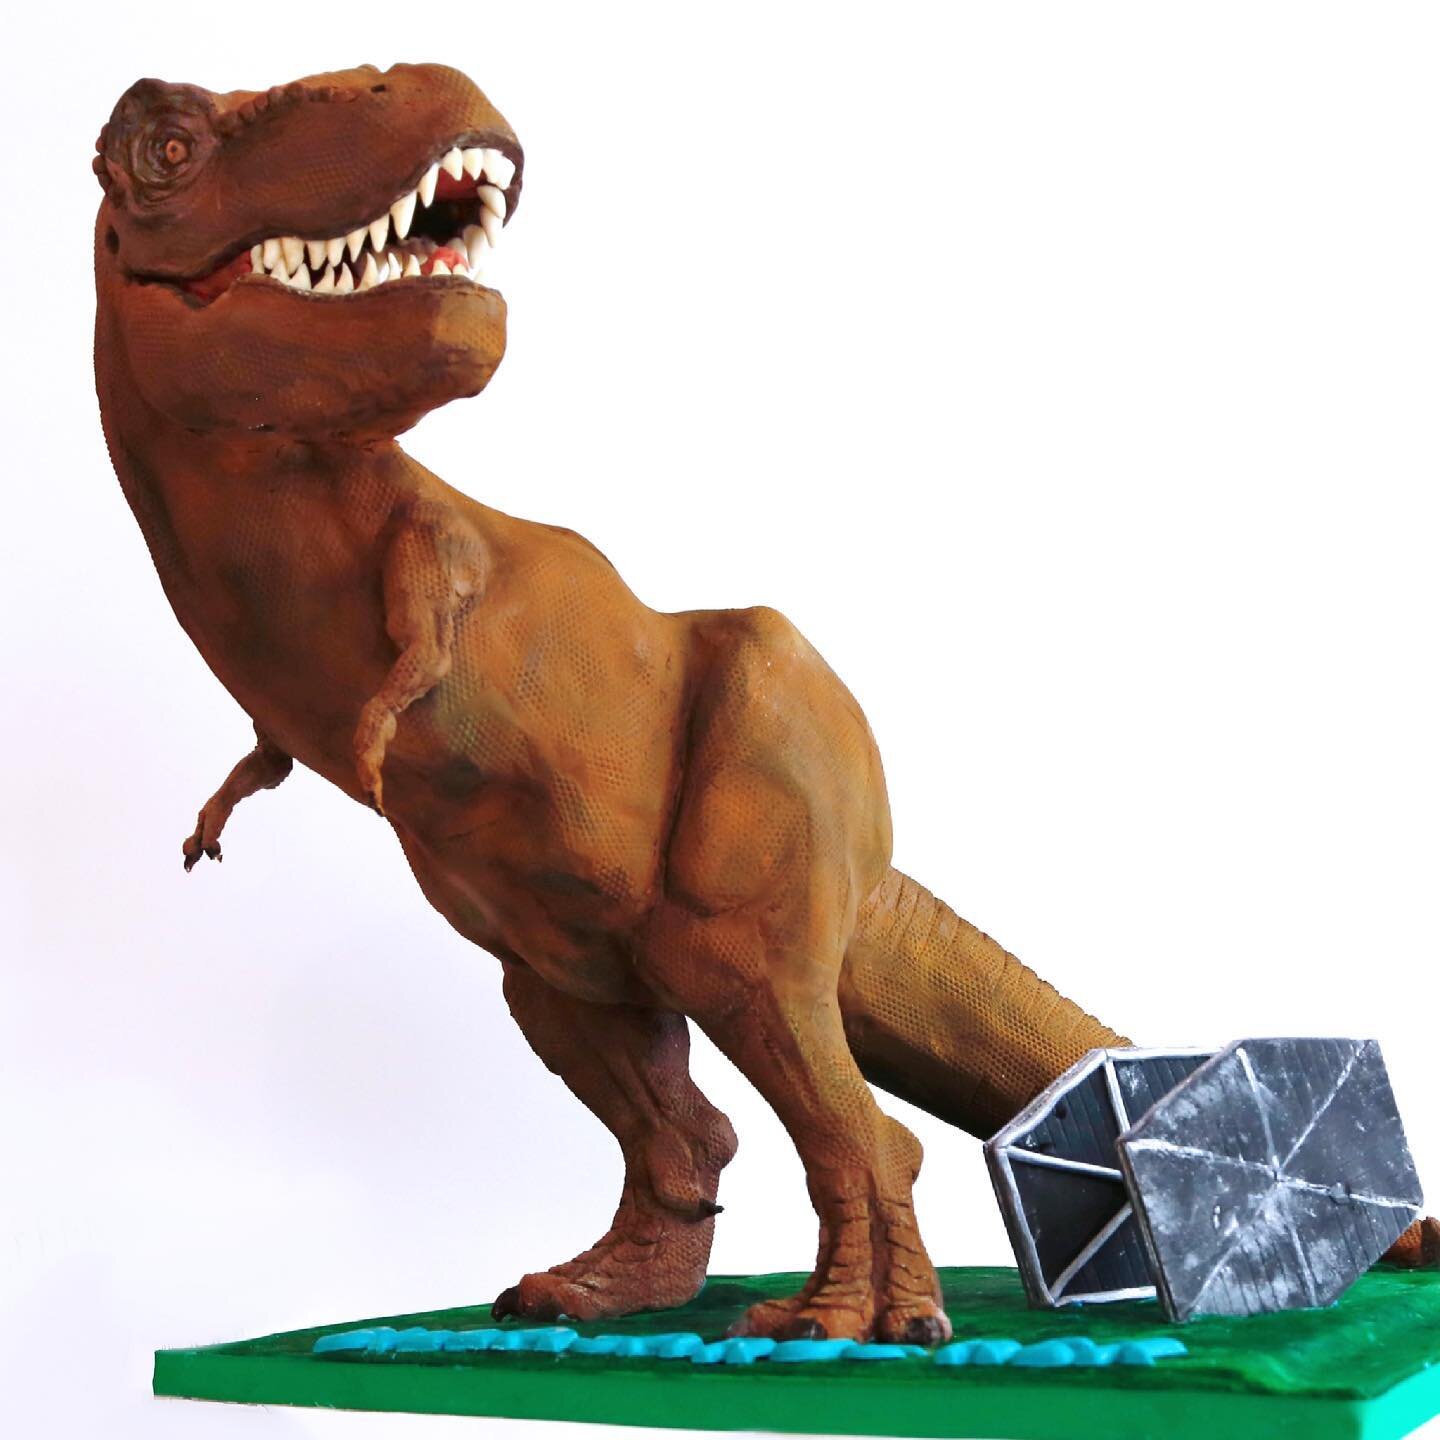 DINO-MITE!! T-Rex vs. TIE-Fighter (T-Rex won) 
.
.
.
Chocolate T-Rex Cake
.
.
.

#dinosaurcake #trexcake #everythingiscake #modelingchocolate #birthdaycake #chocolatecake #sugarart #cakedecorating #baker #satisfying #caketutorial #handmade #sculptedc